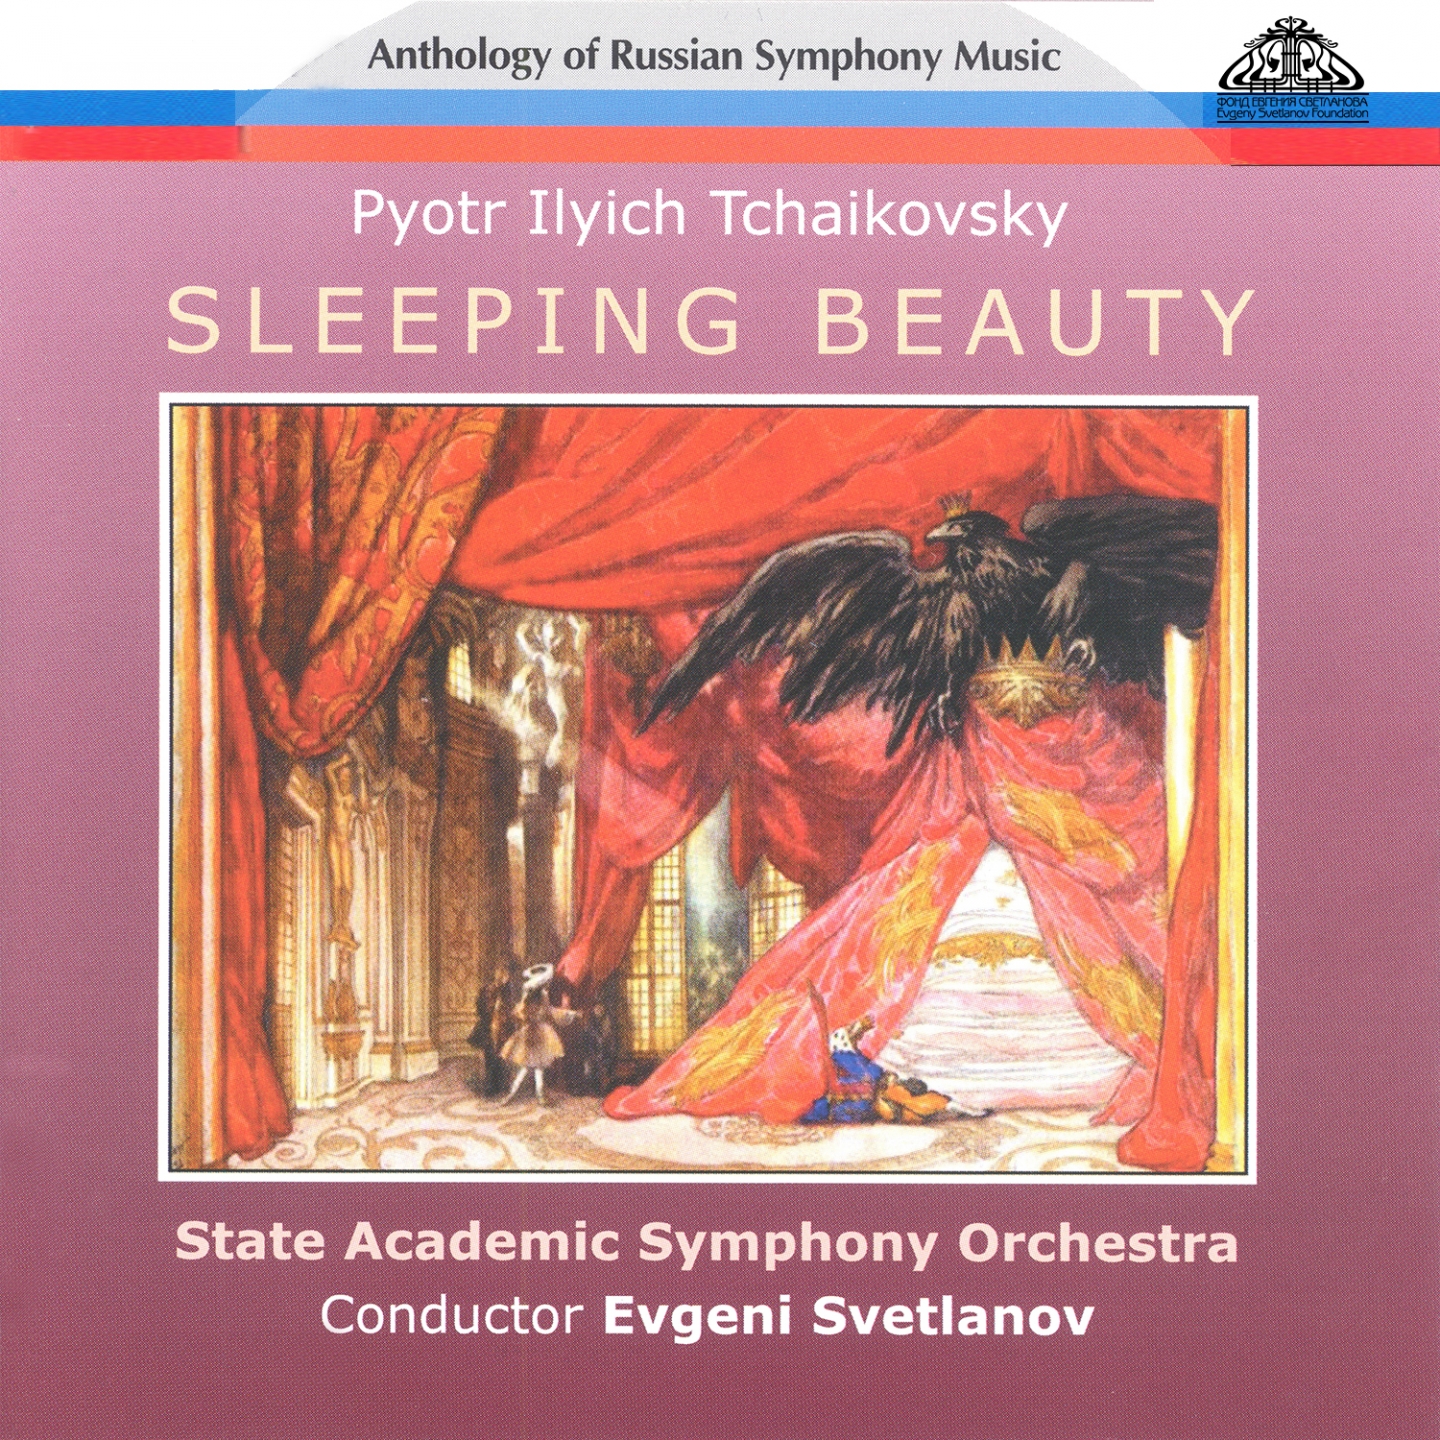 Sleeping Beauty, Op. 66, Prologue: Variation. Coulante-Fleur de farine